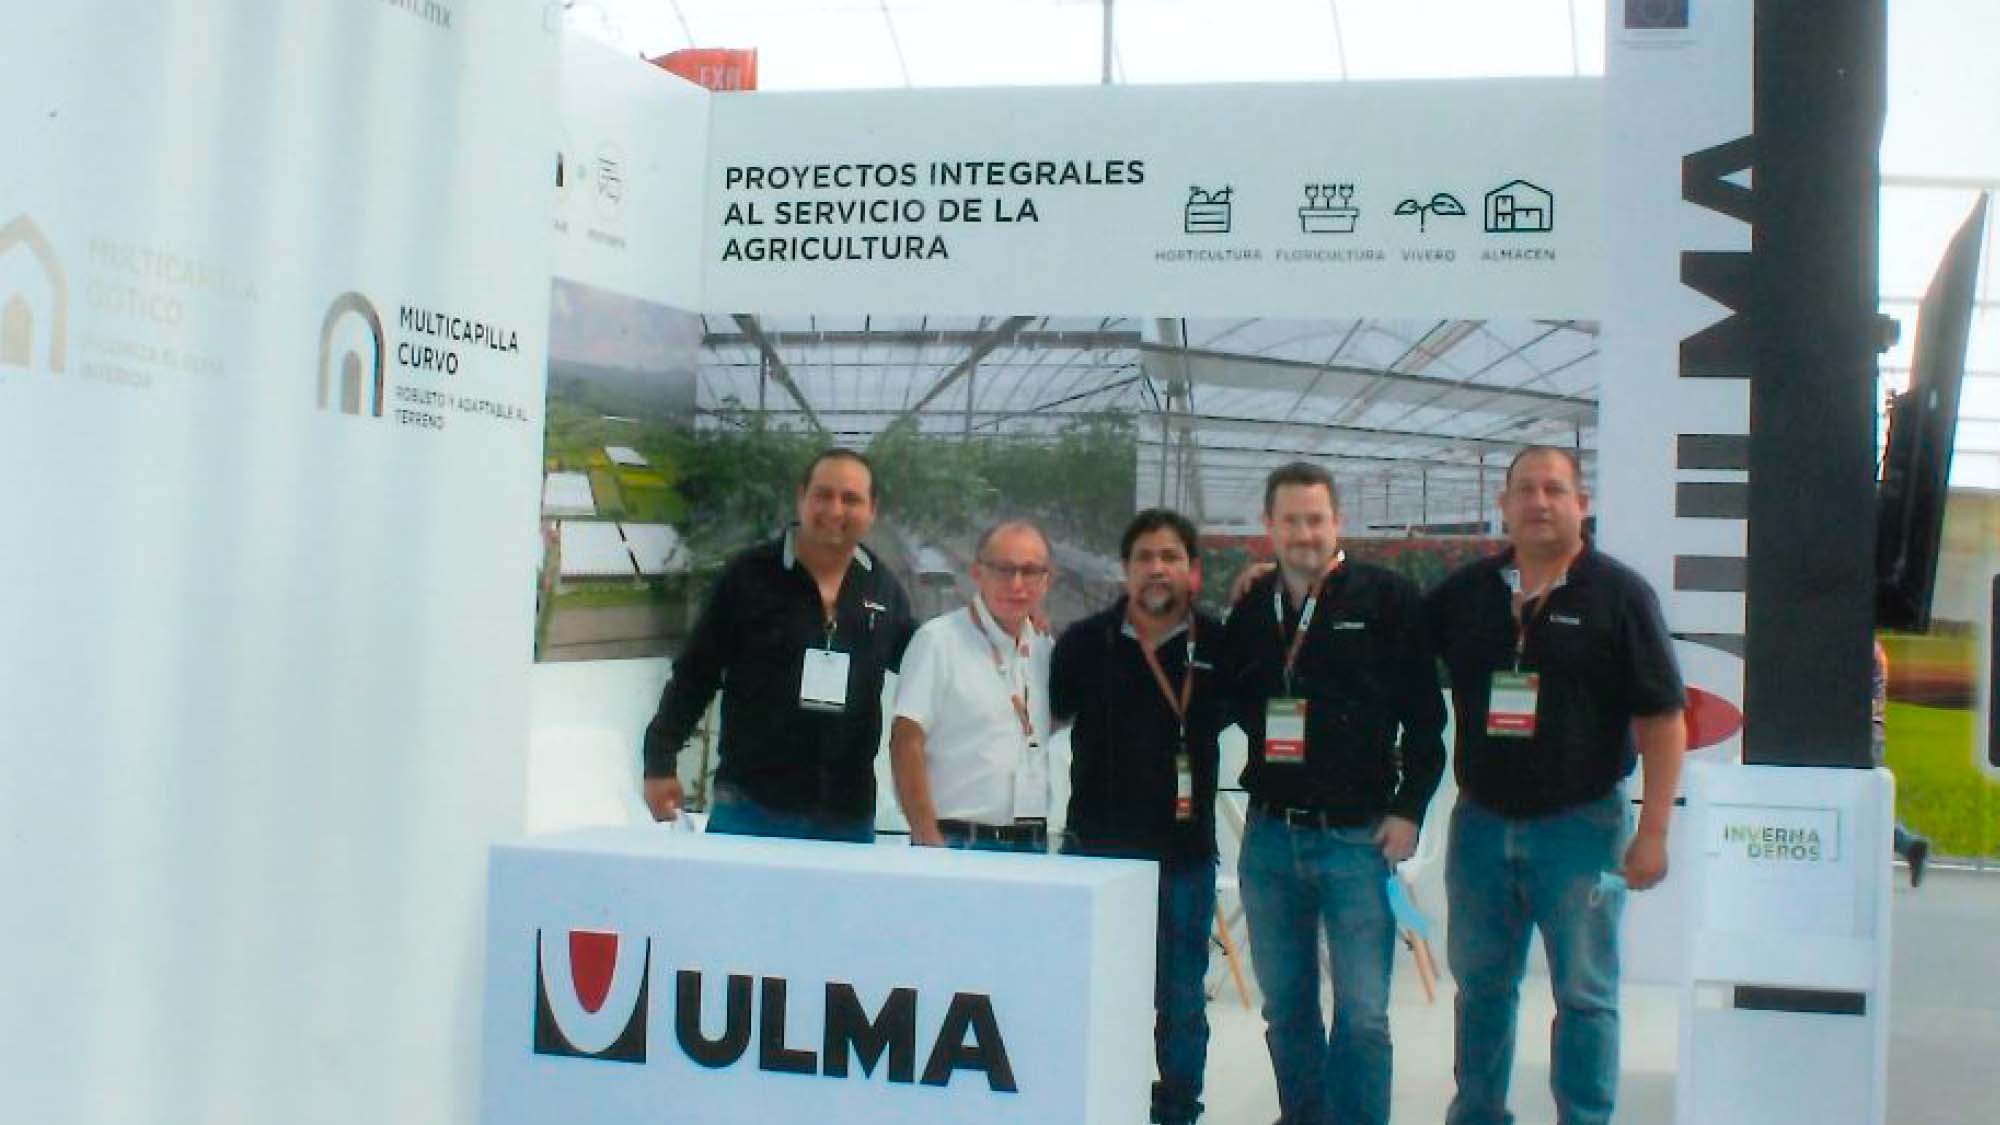 ULMA Agrícola present at Expo AgroAlimentaria Guanajuato 2021